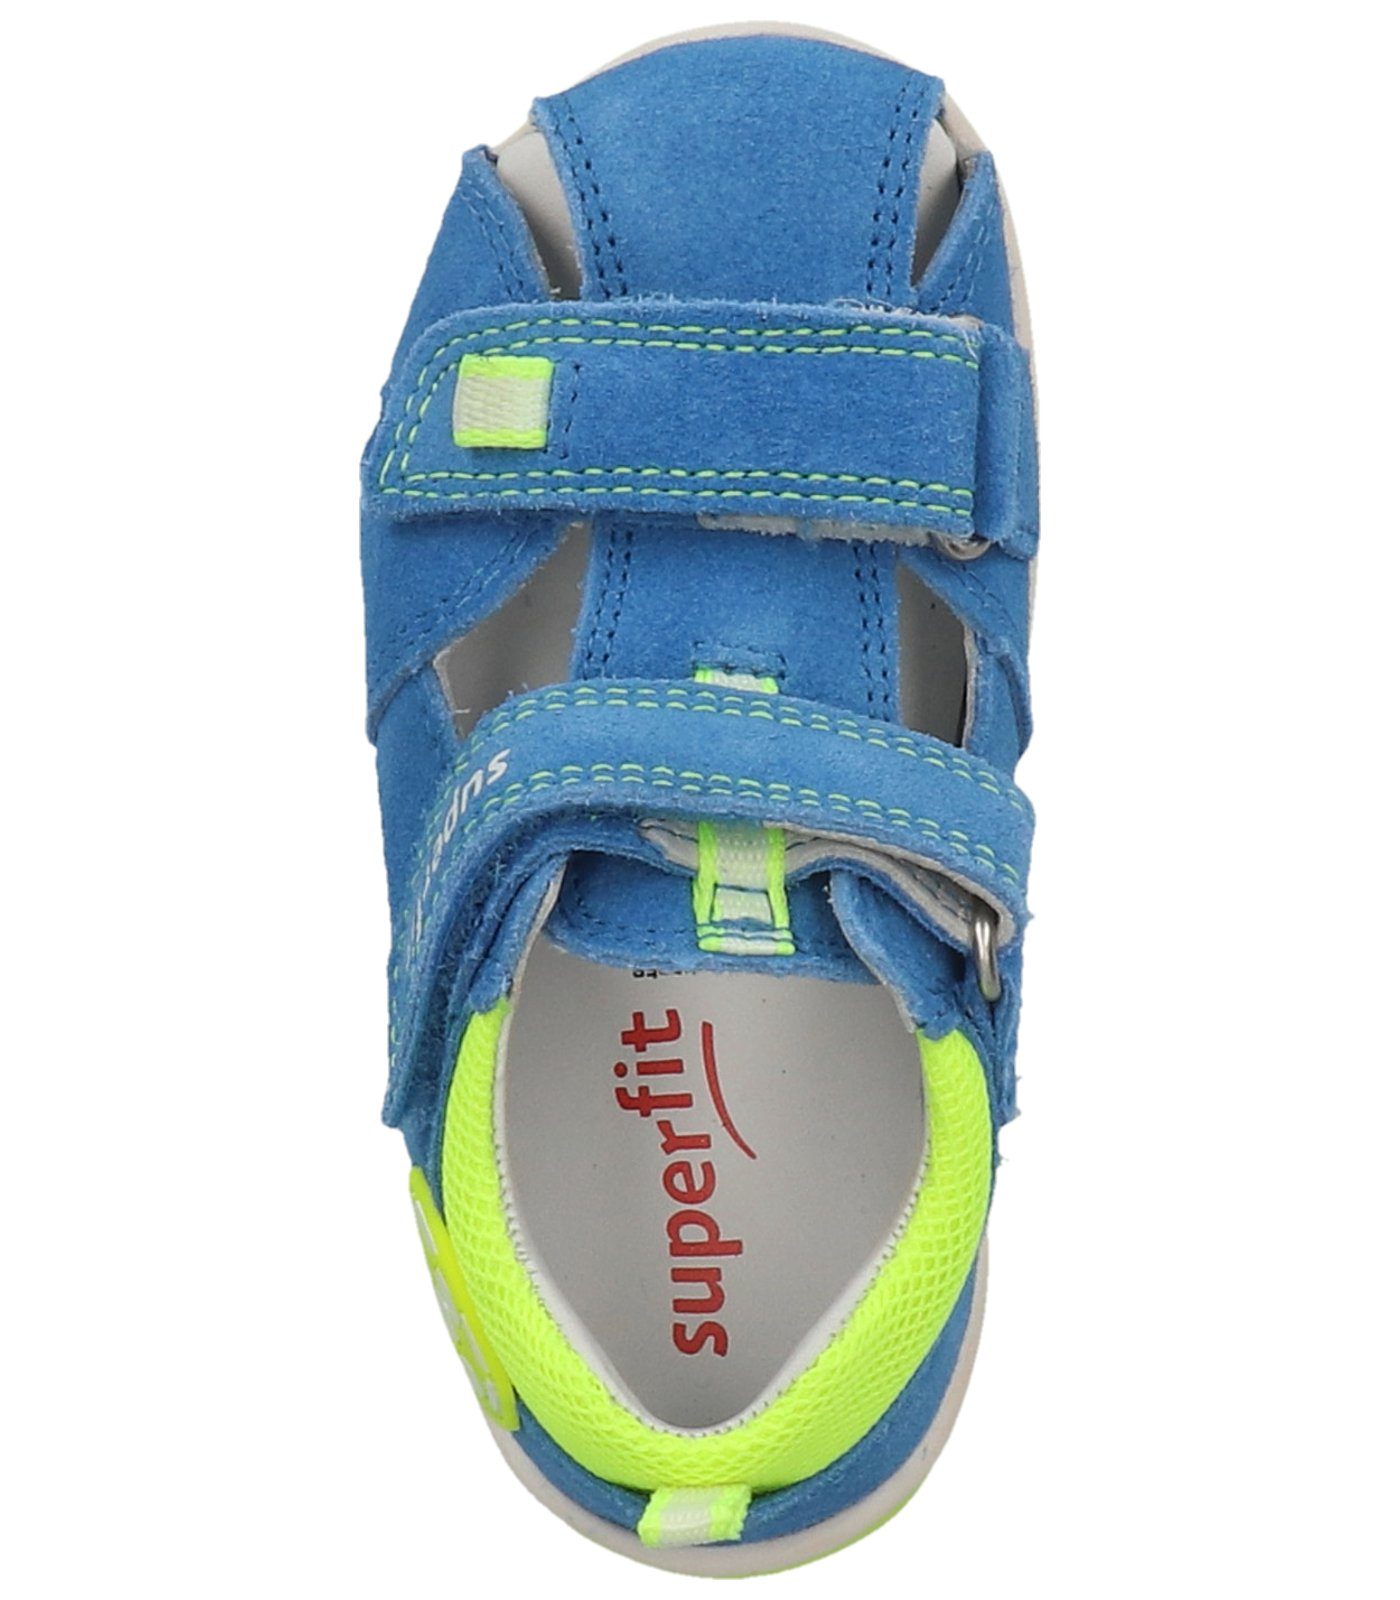 Trekkingsandale (Blau/Gelb) Superfit (20401455) Sandalen Veloursleder/Textil Blau